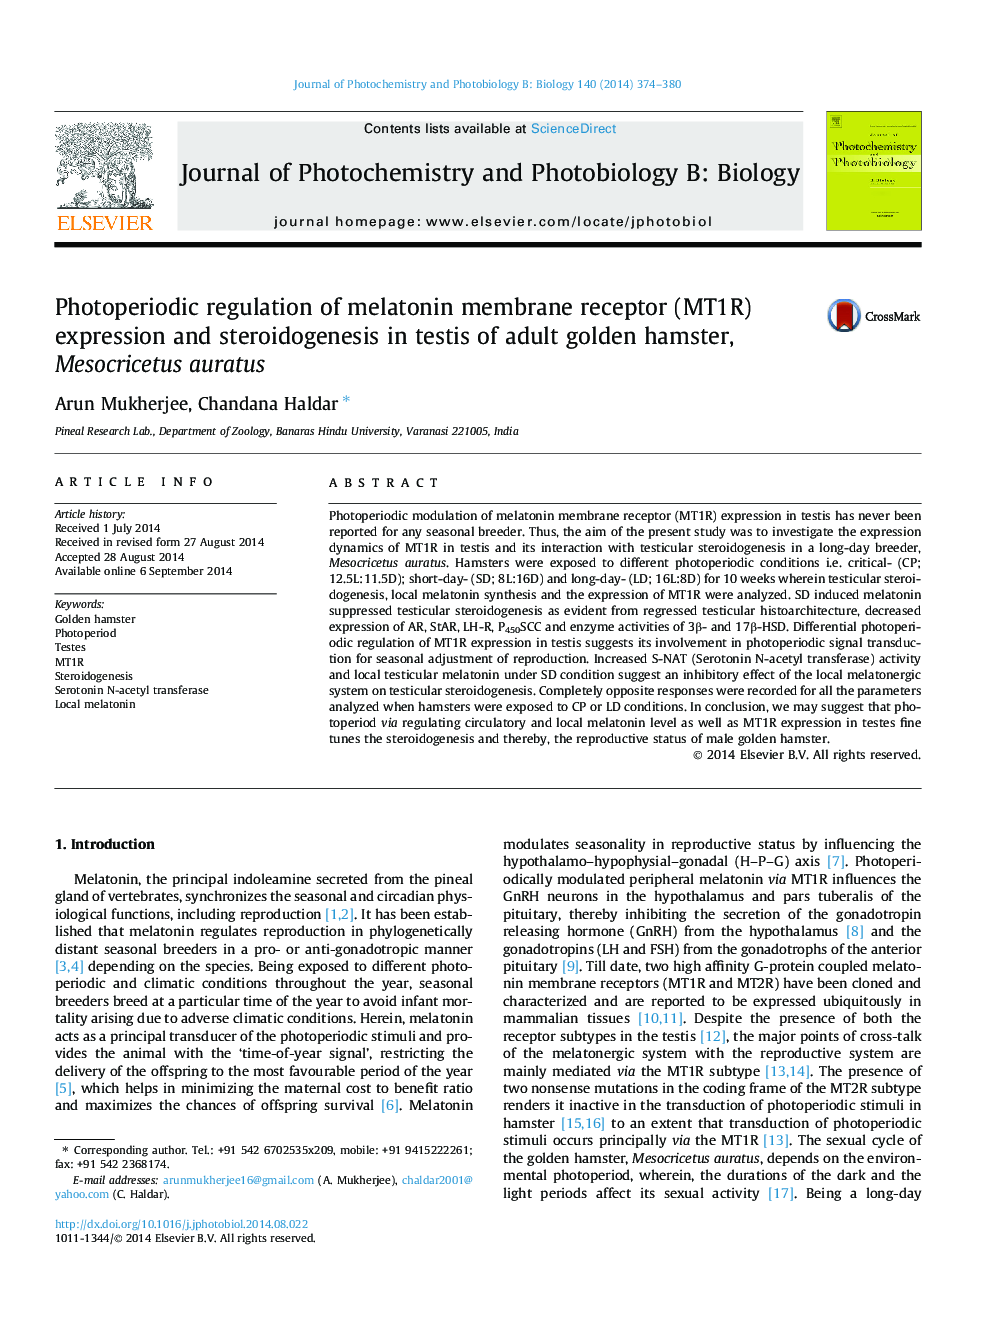 Photoperiodic regulation of melatonin membrane receptor (MT1R) expression and steroidogenesis in testis of adult golden hamster, Mesocricetus auratus